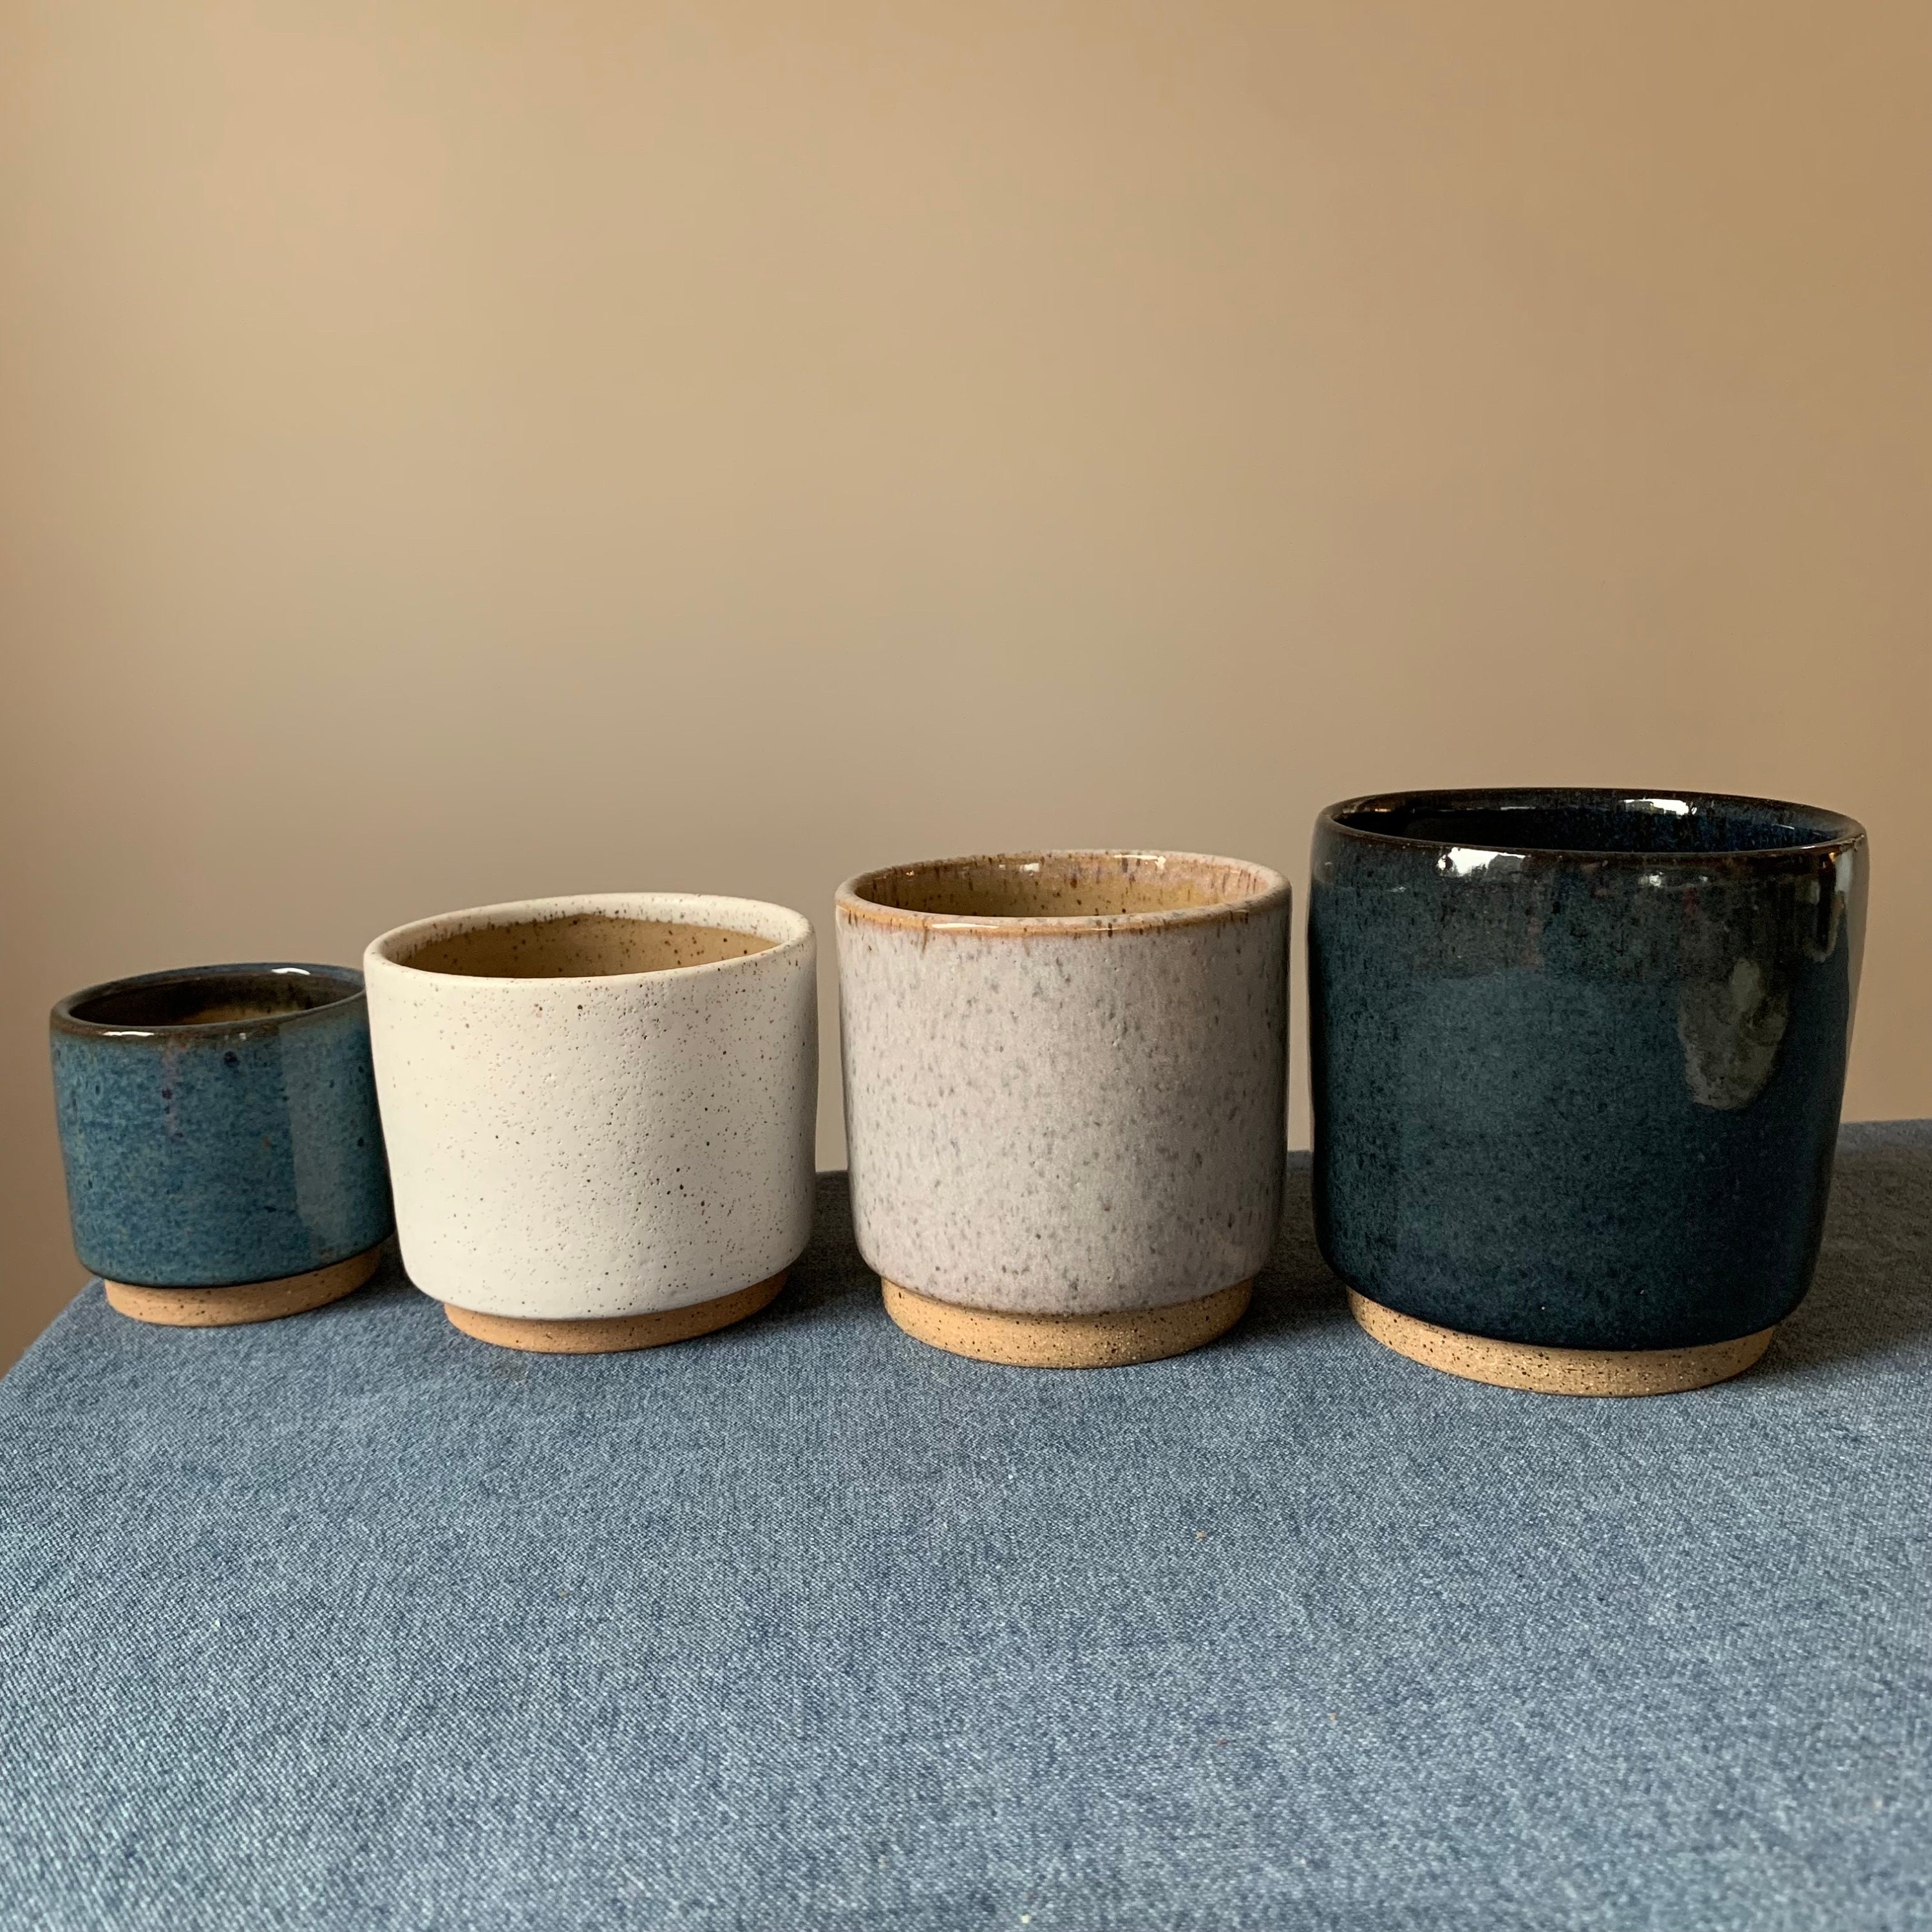 Handmade Stacking Ceramic Cups, 4 Oz, 8 Oz, 12 Oz, 16 Oz, Espresso, Sake,  Tea, Coffee, Cortado, Macchiato, Latte, Doppio, Lungo 